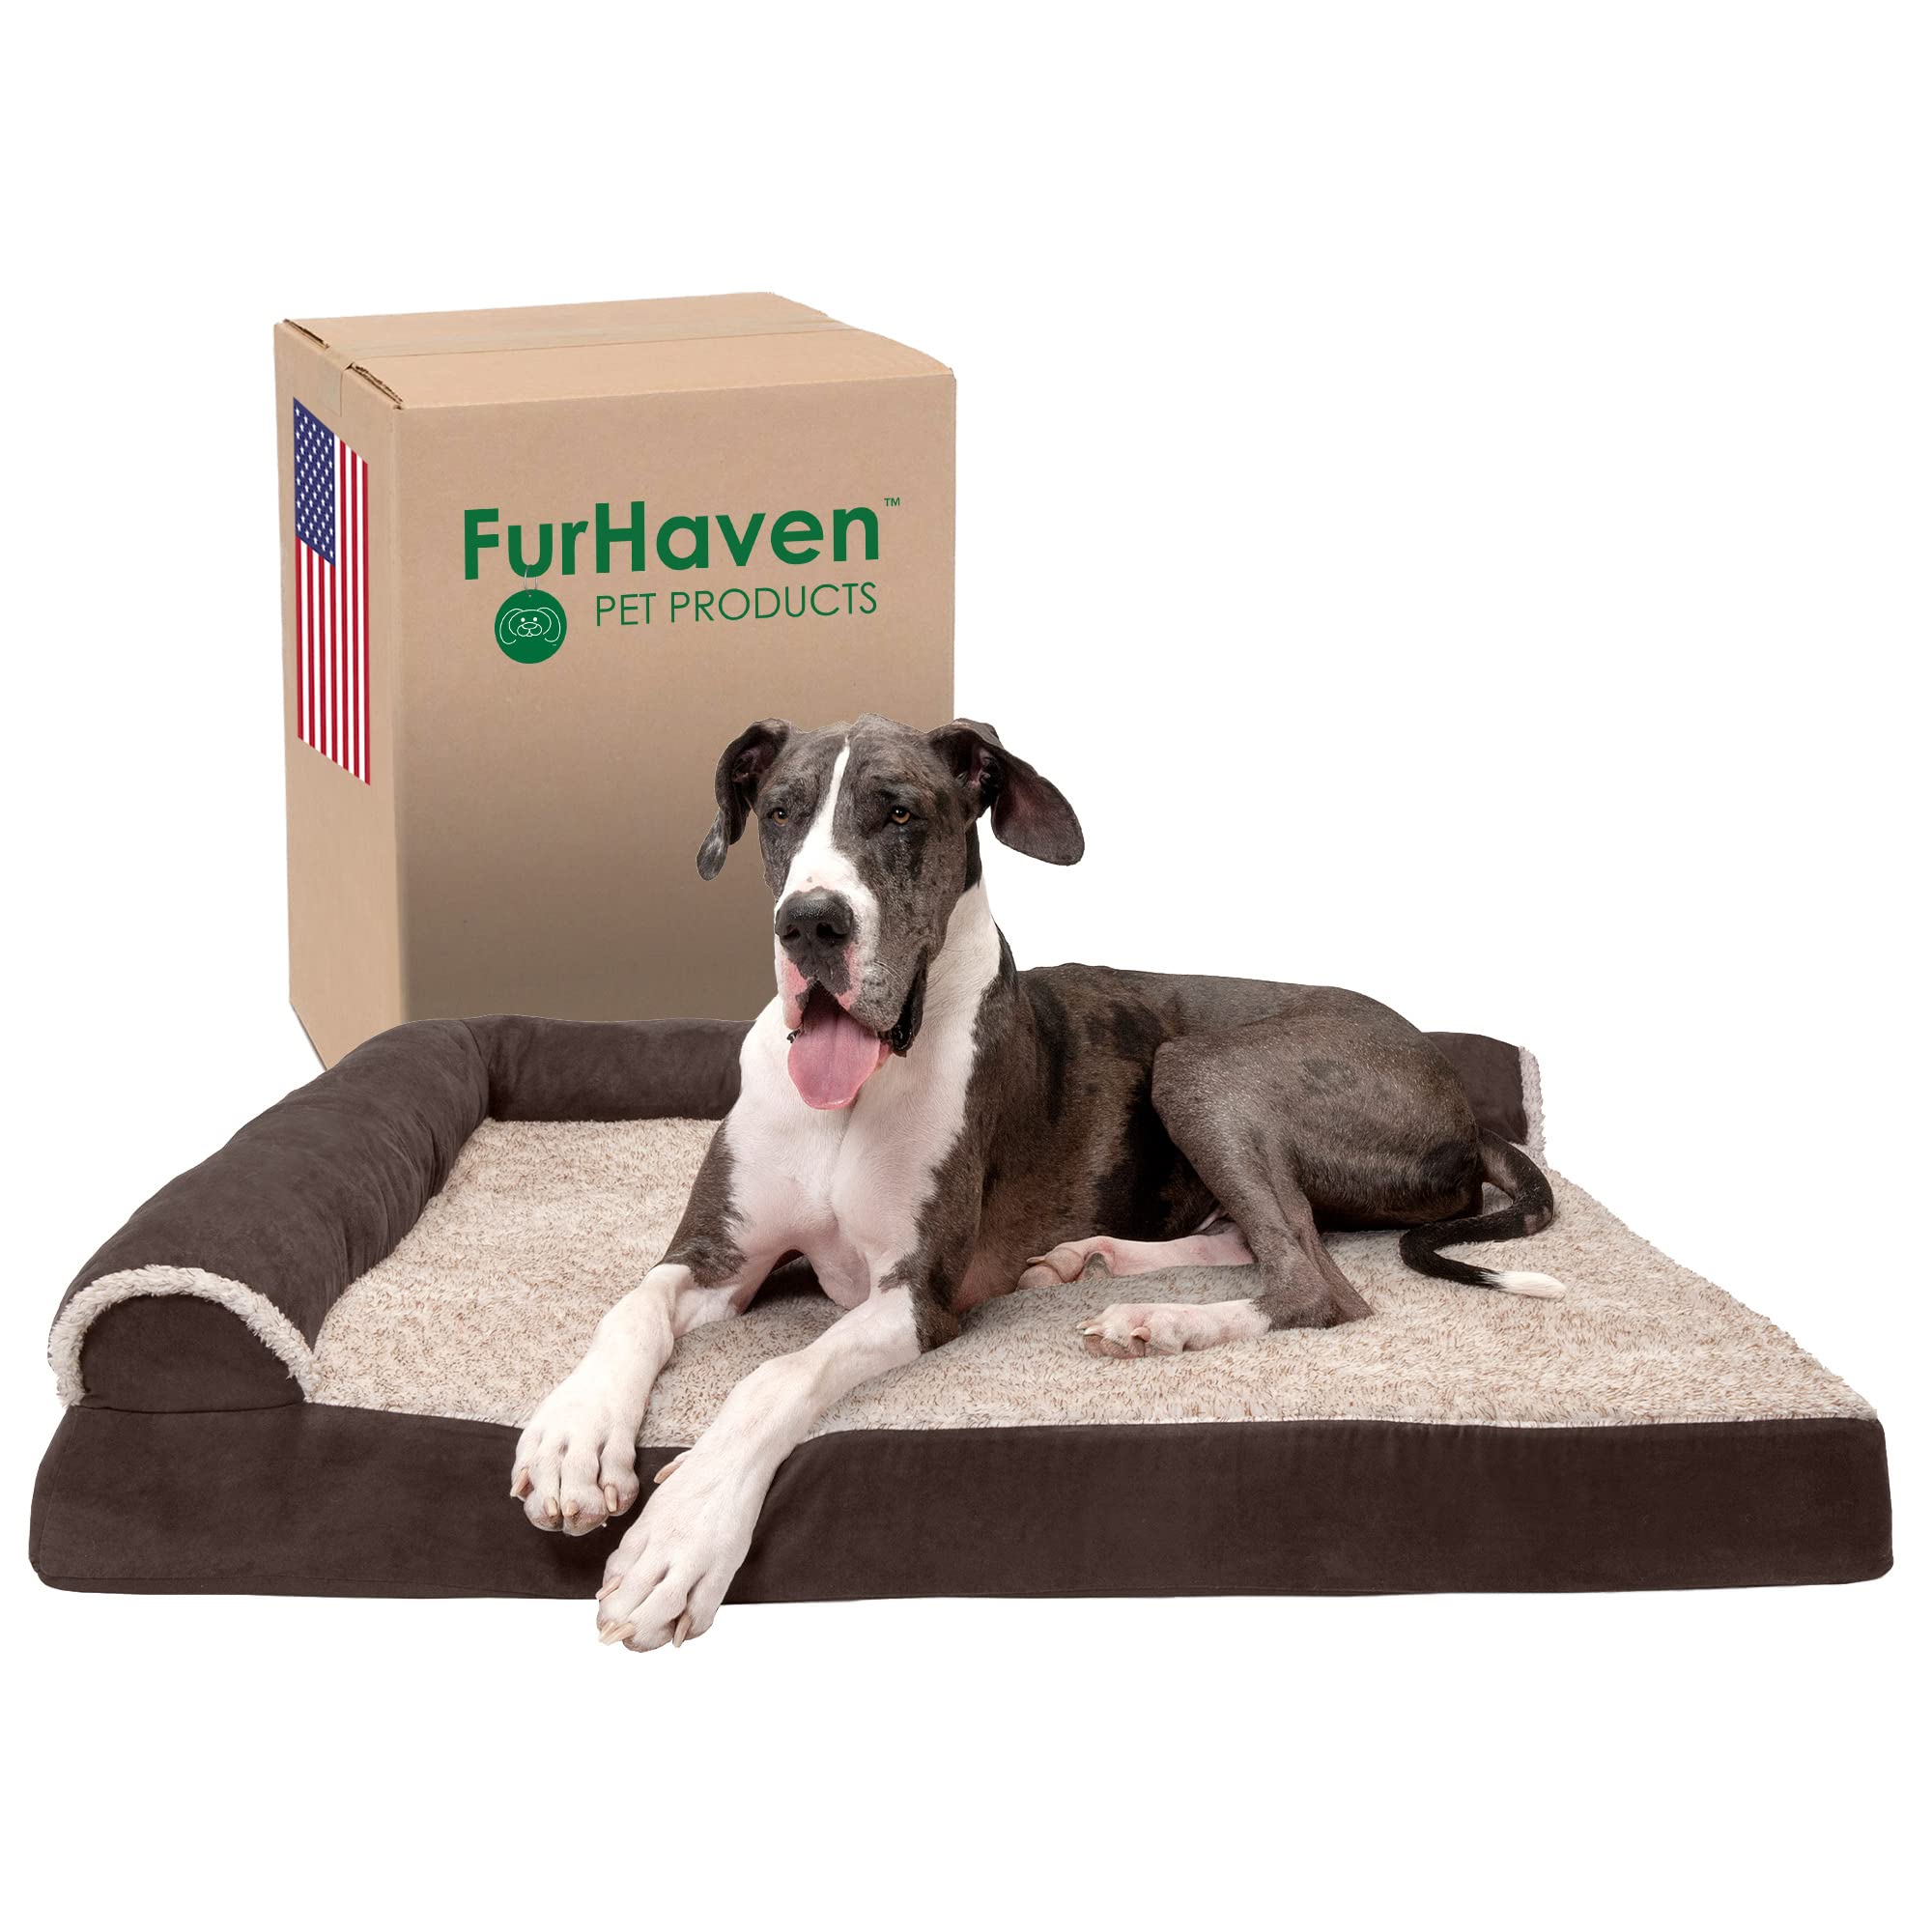 Furhaven 大型犬矫形狗床，带可拆卸枕垫和可清洗罩，适合体重不超过 125 磅的狗狗 - 两色毛绒人造毛...